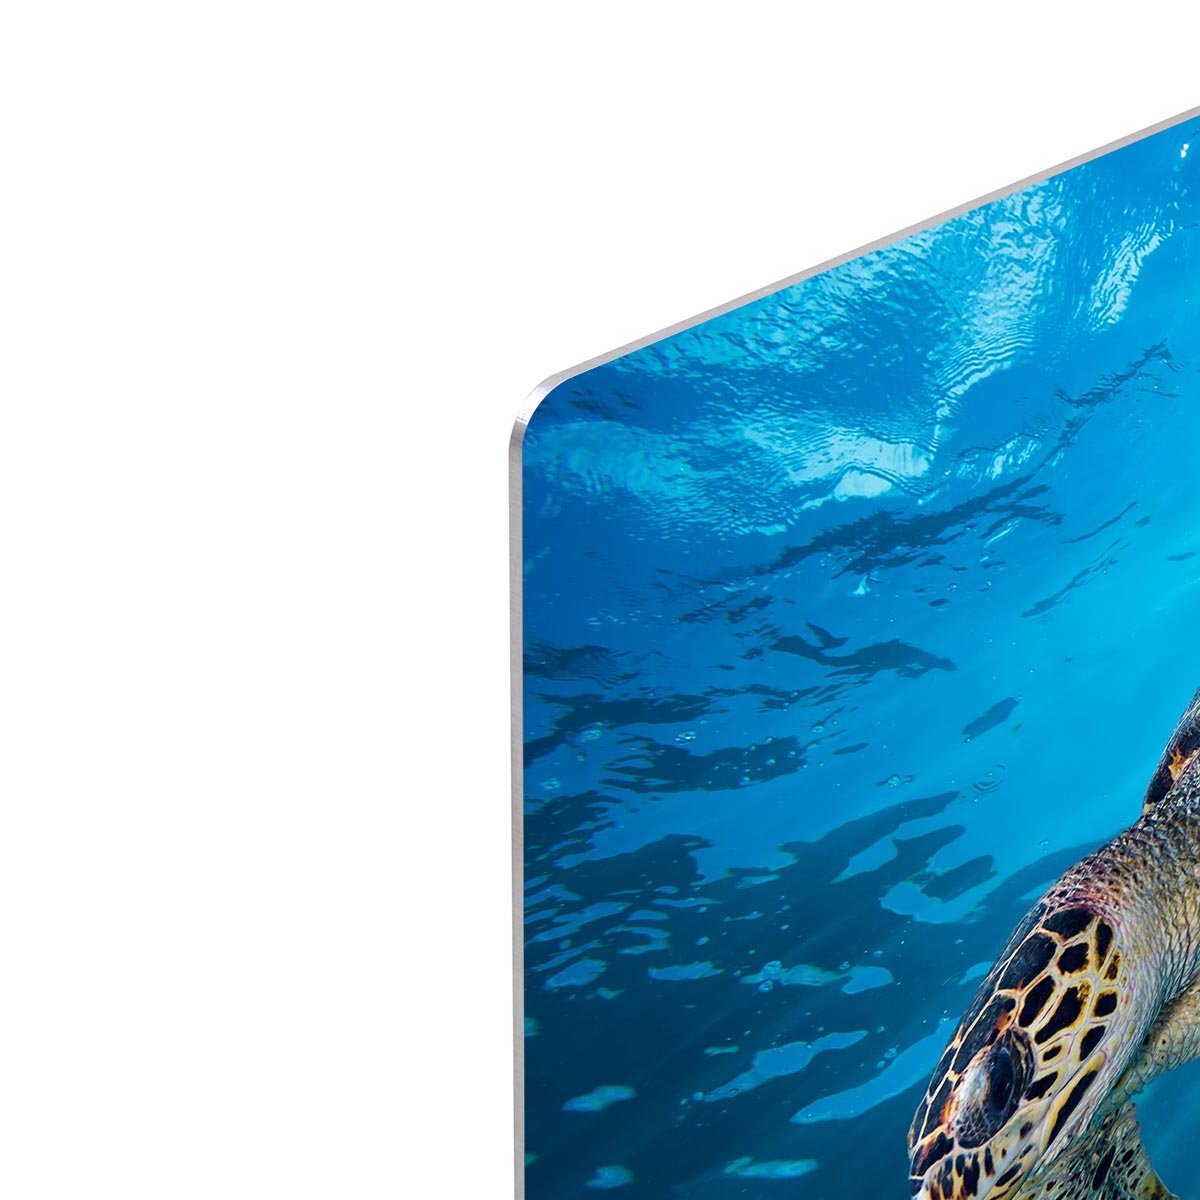 Turtle dive HD Metal Print